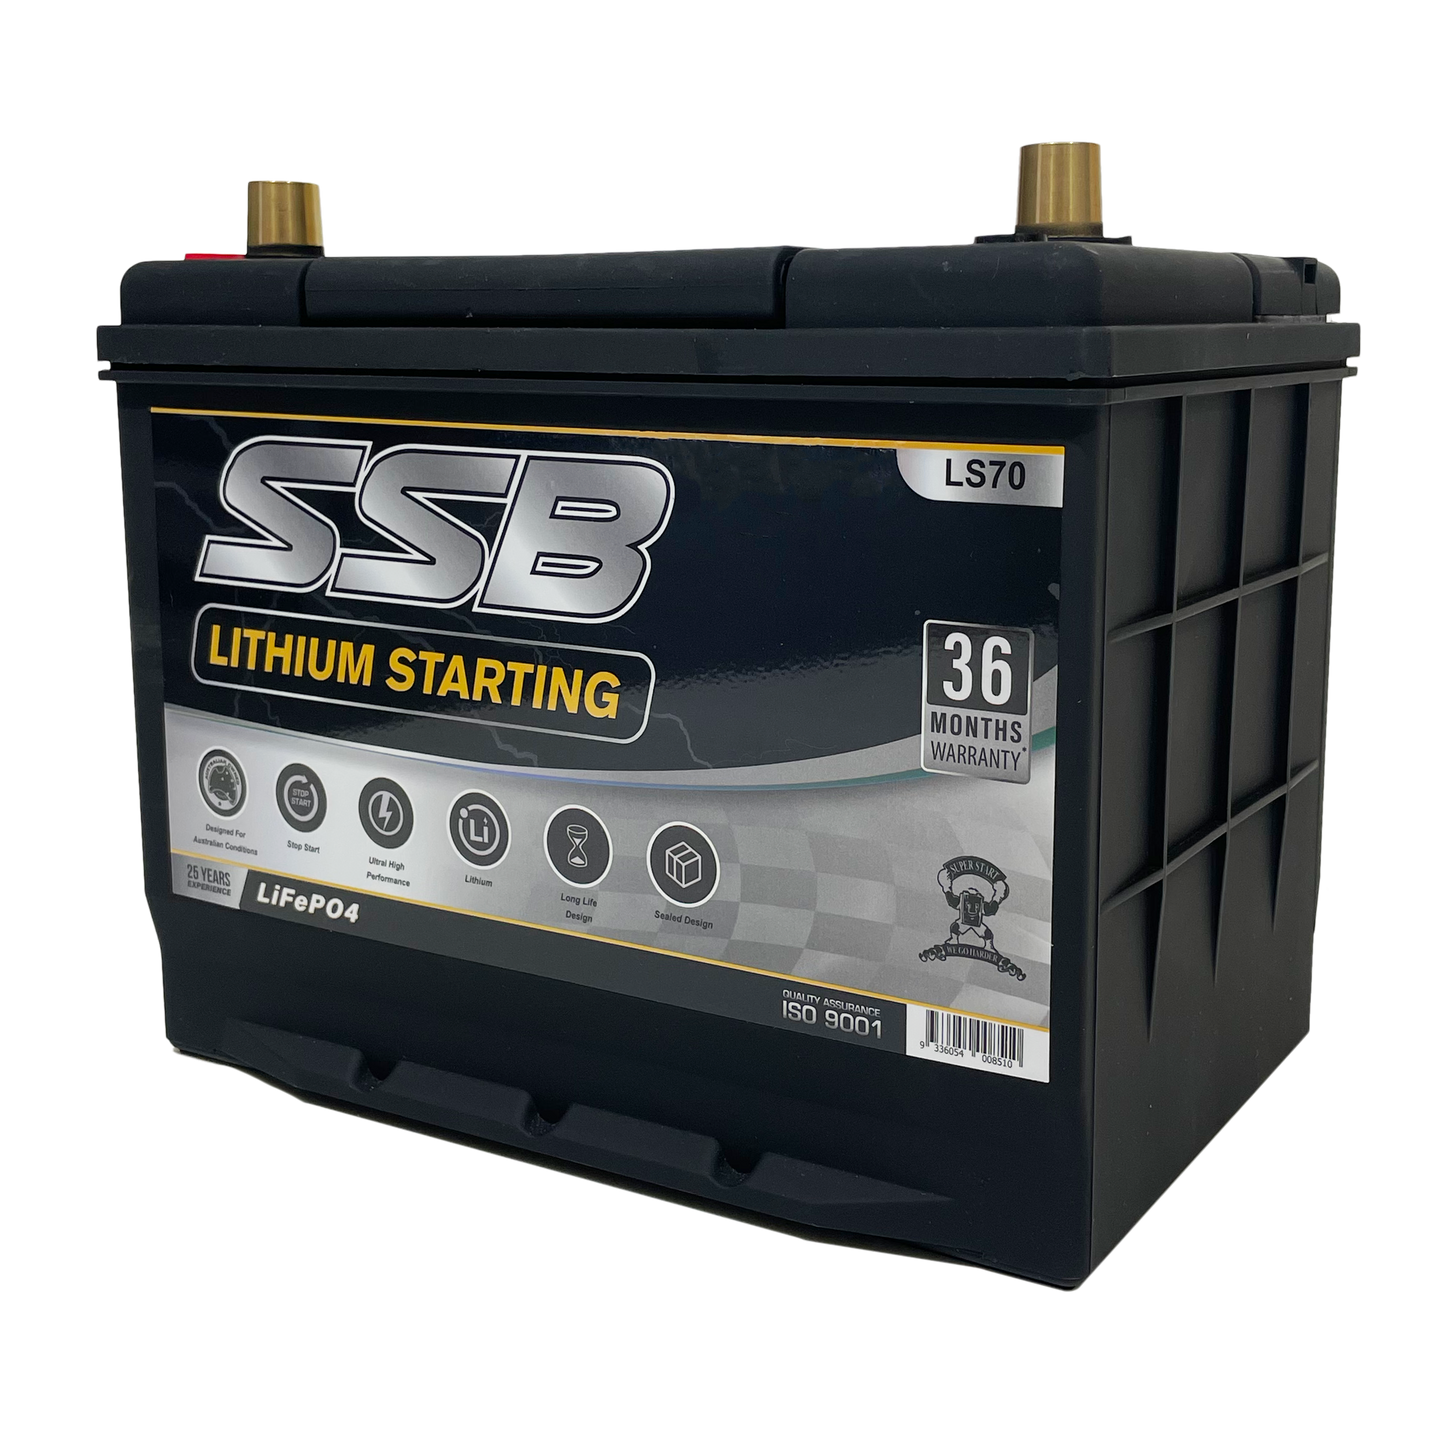 SSB LS70 12v 60Ah 1400CCA Lithium Starting Battery